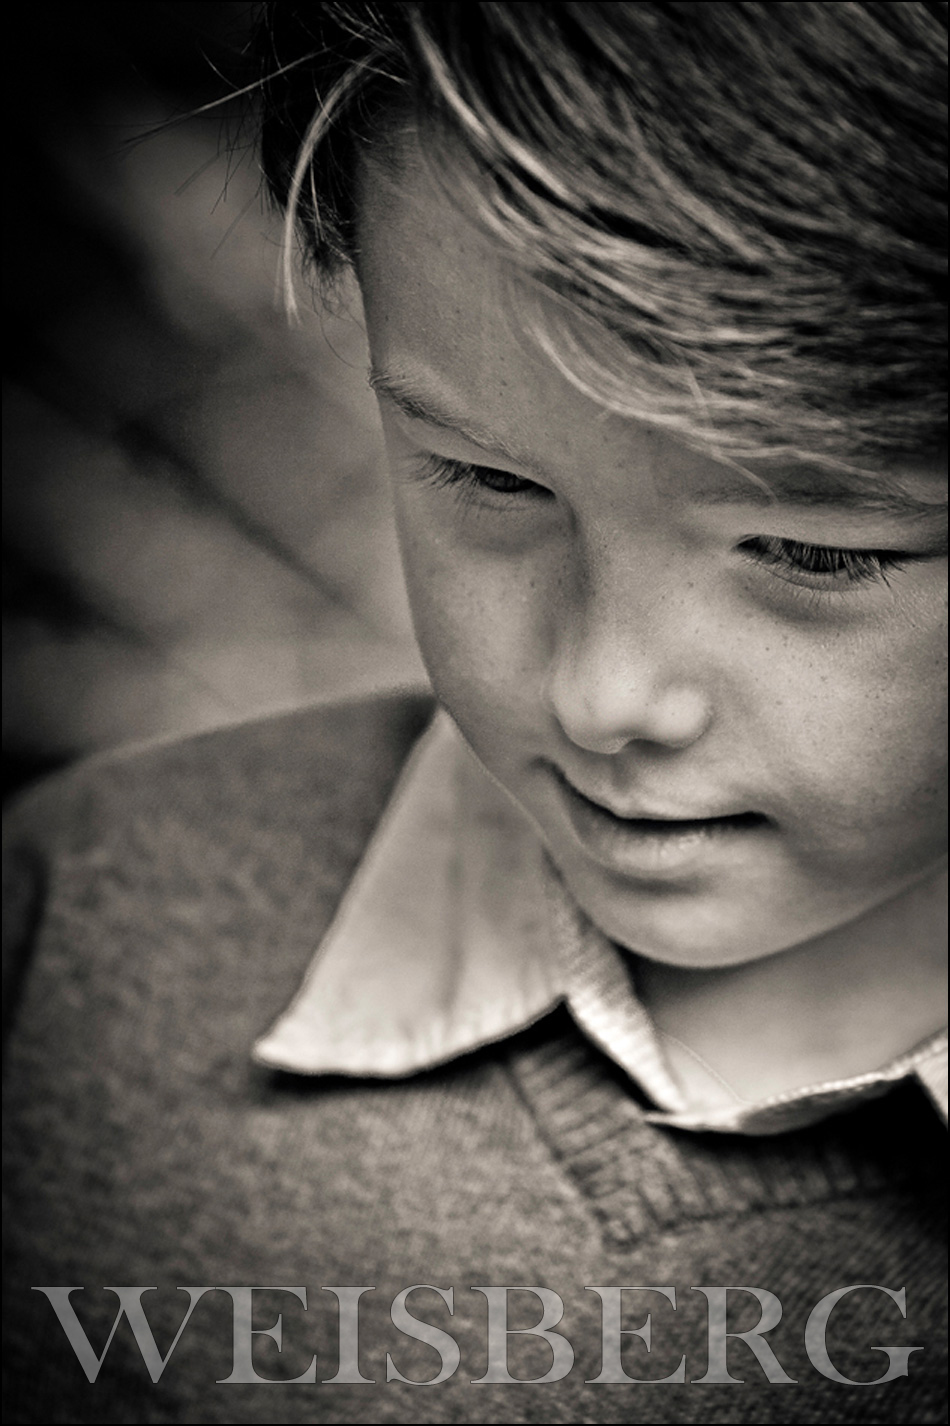 black & white portrait of a 6 year old boy